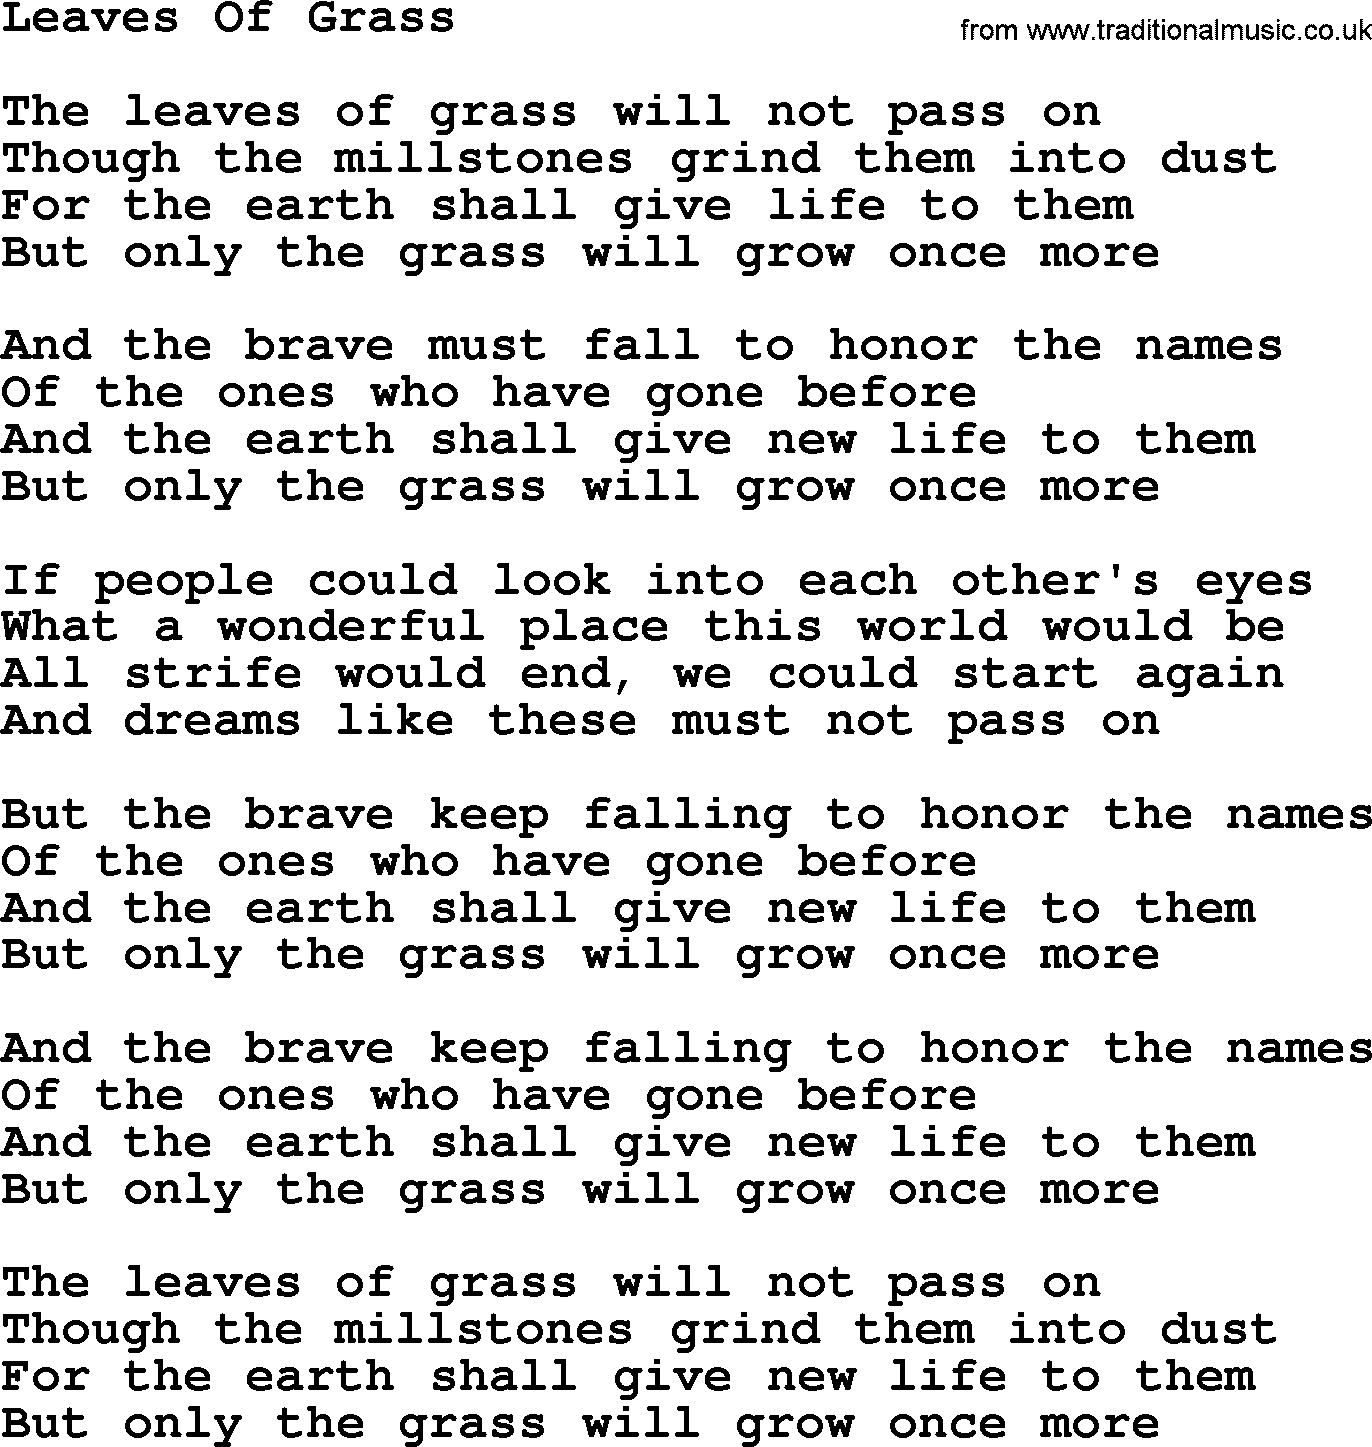 Gordon Lightfoot song Leaves Of Grass, lyrics